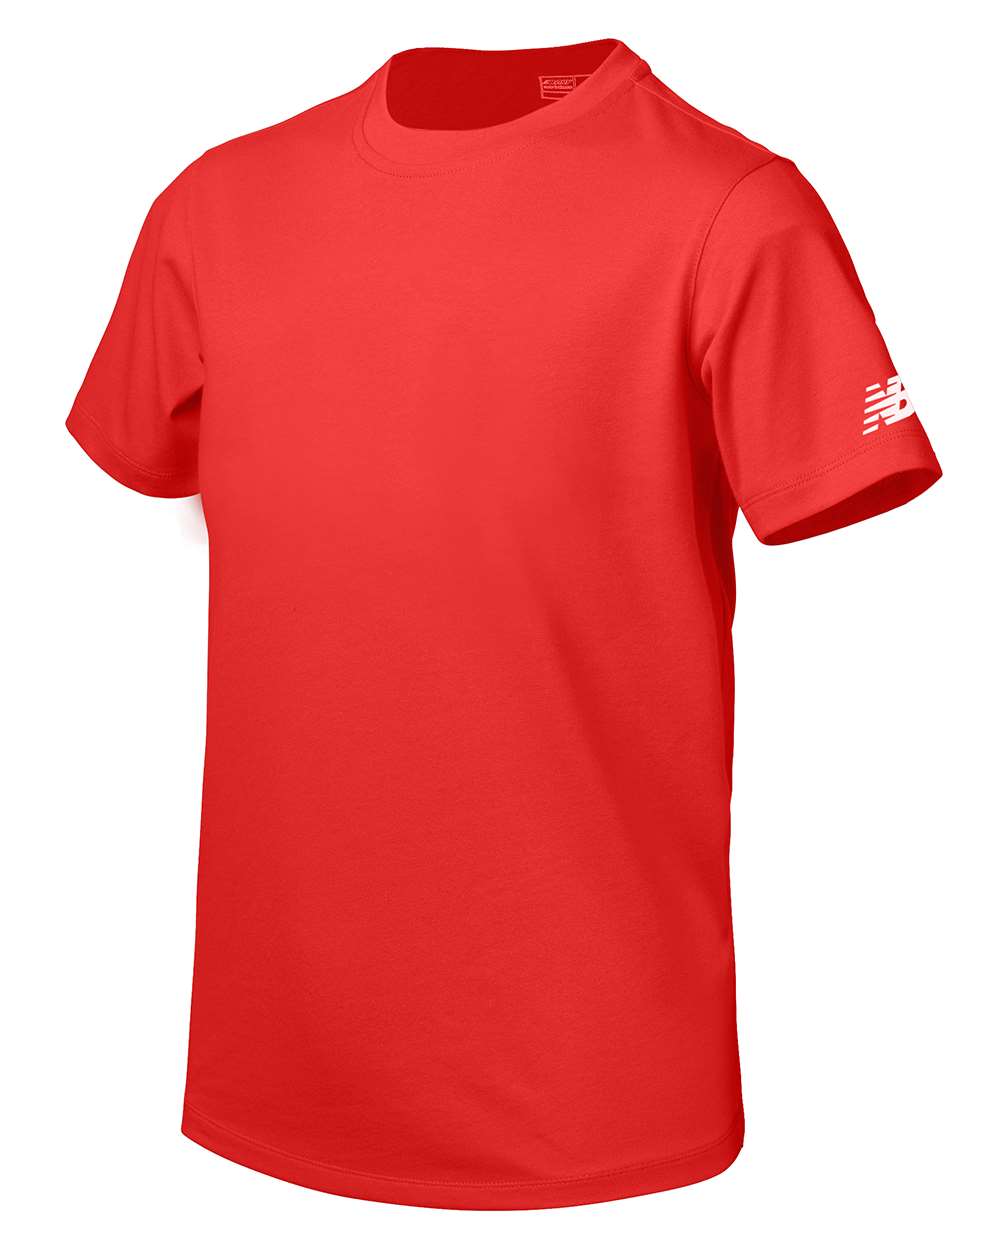 New Balance Youth Performance T-Shirt #YB81004P Red